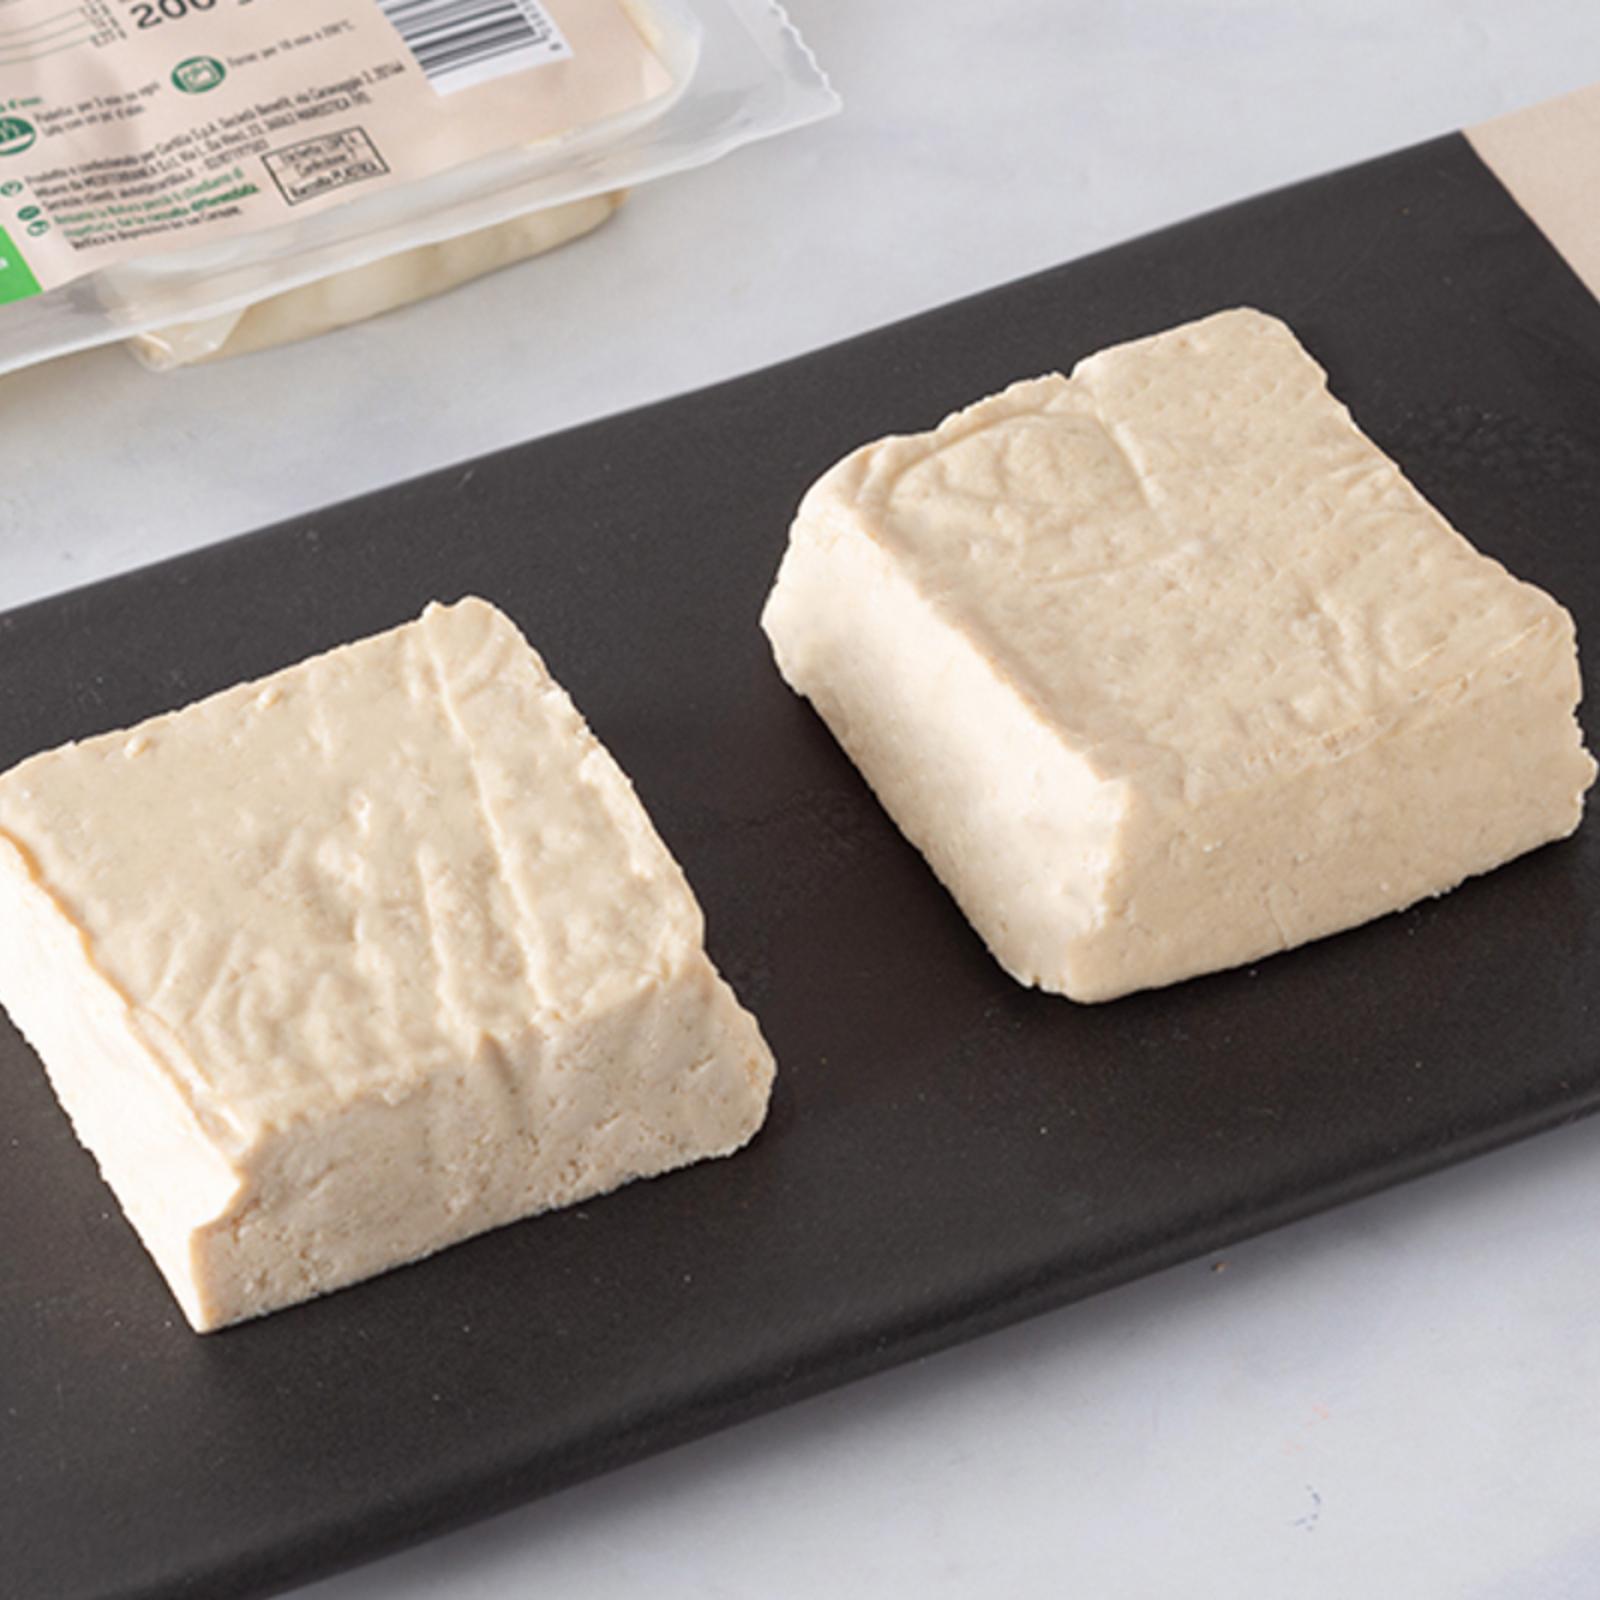 Tofu al naturale da soia italiana BIO